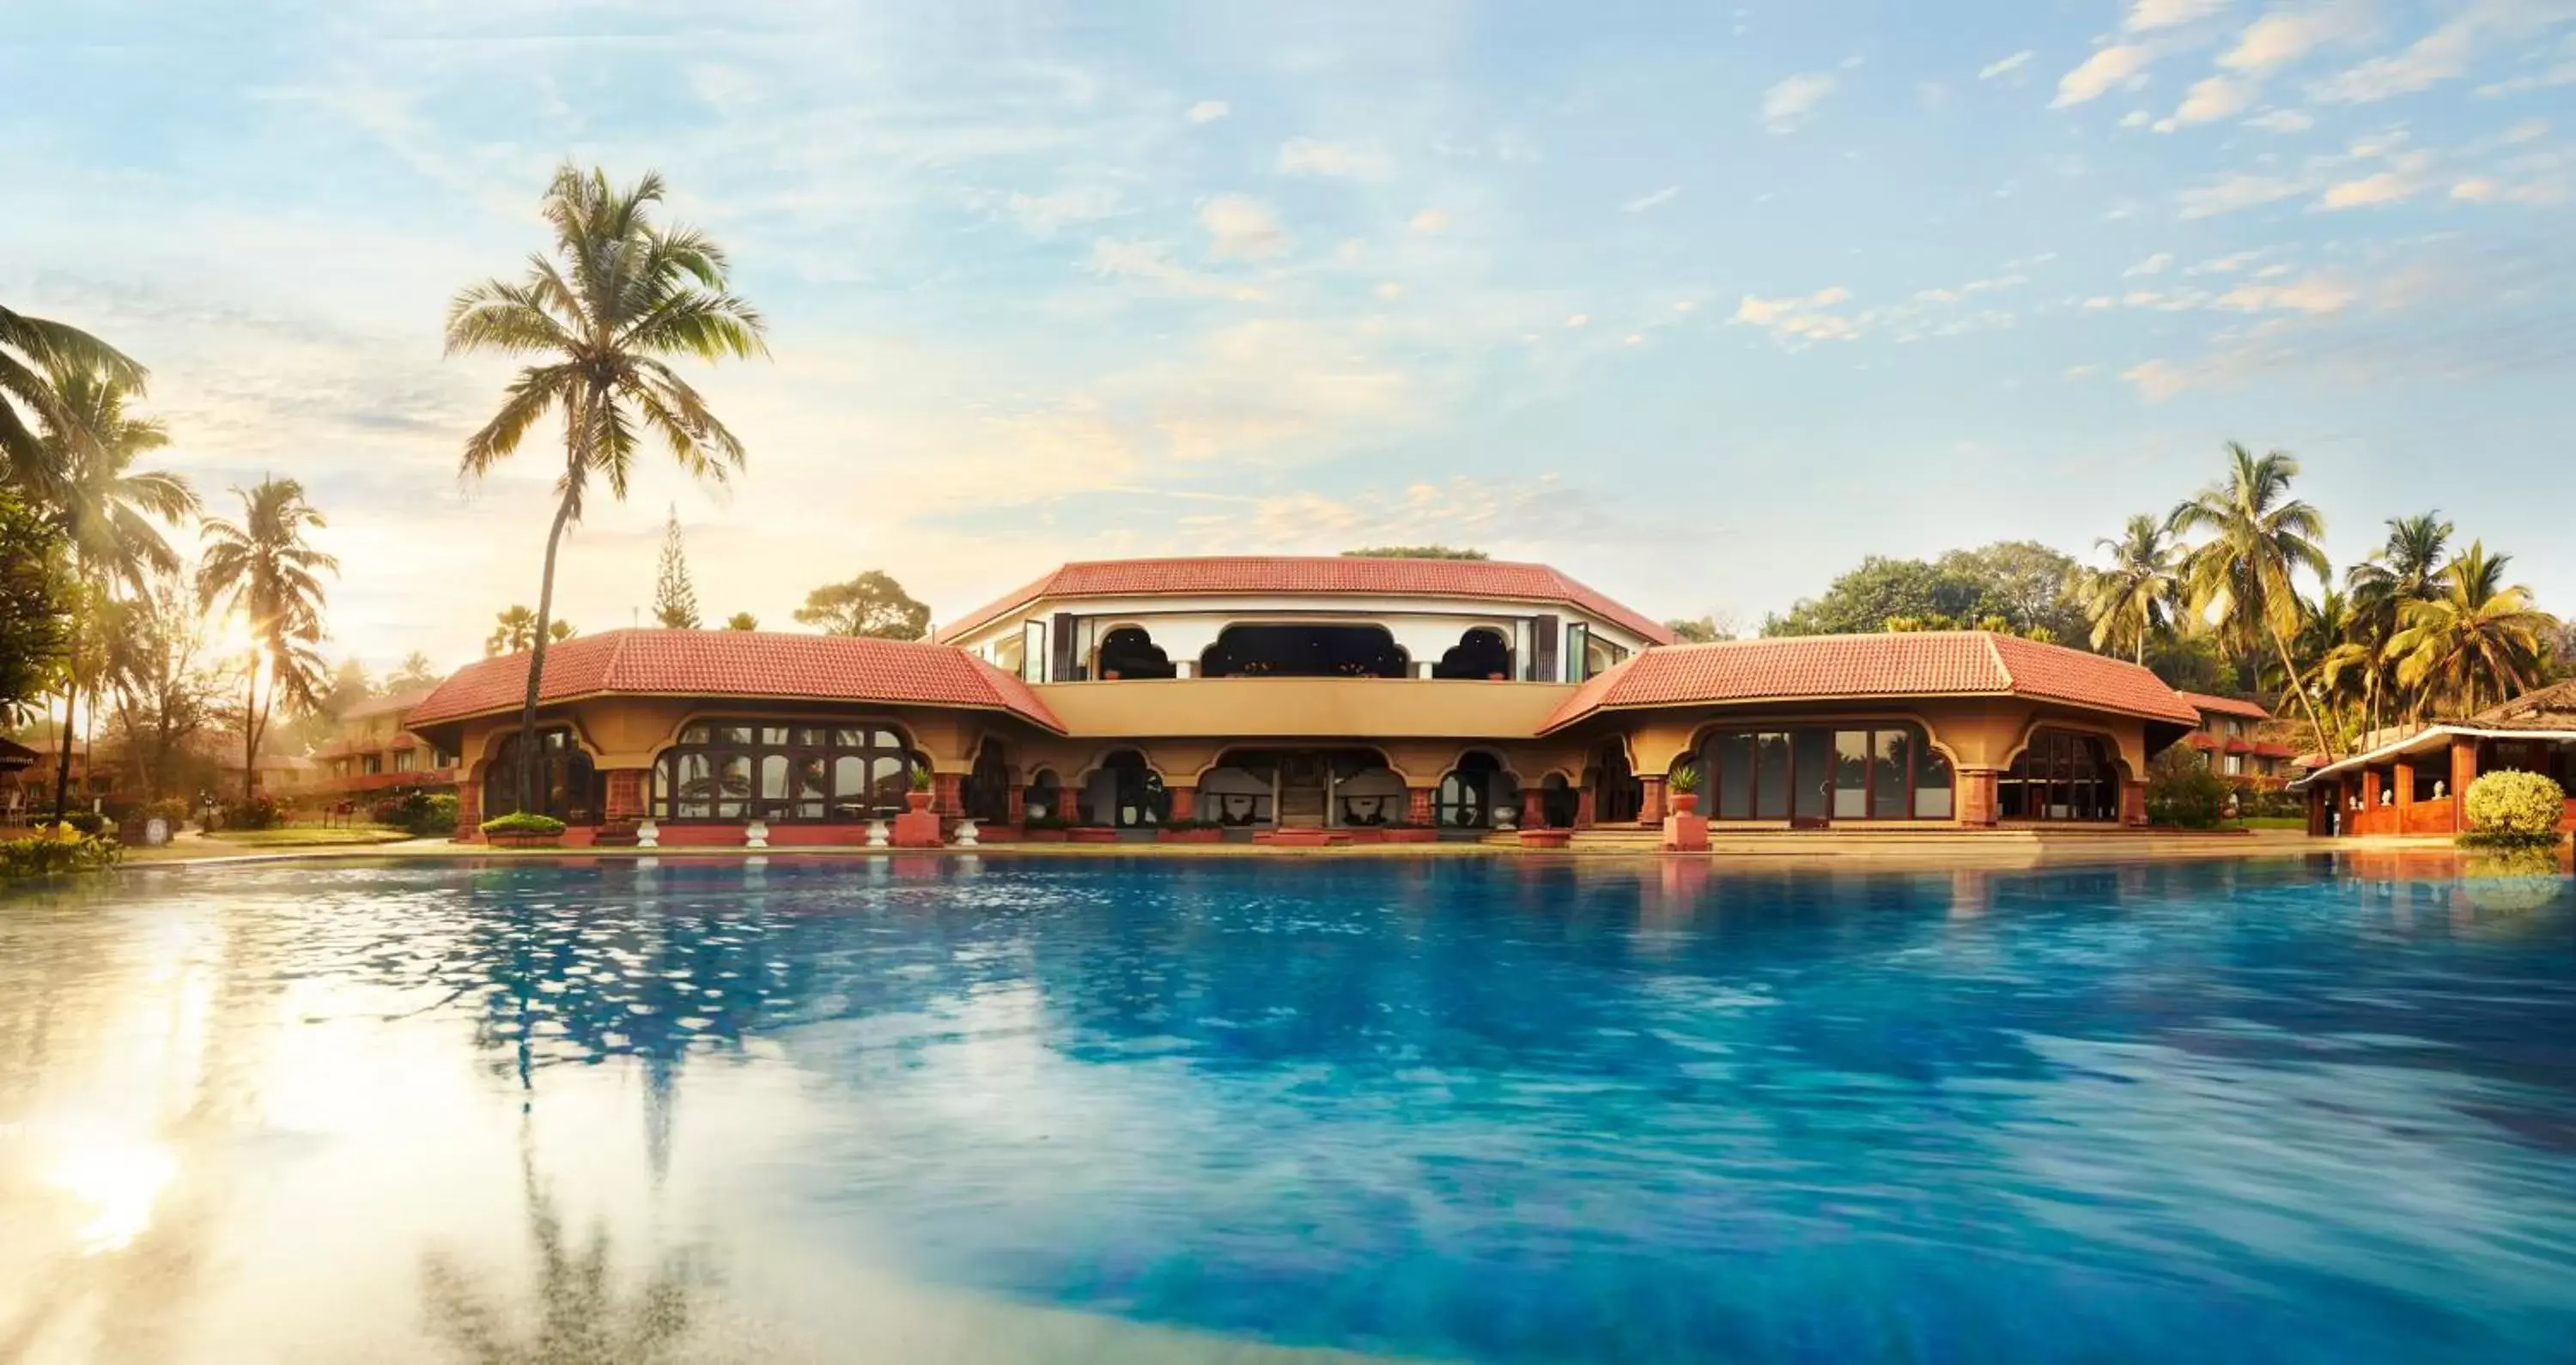 Swimming pool in Taj Fort Aguada Resort & Spa, Goa